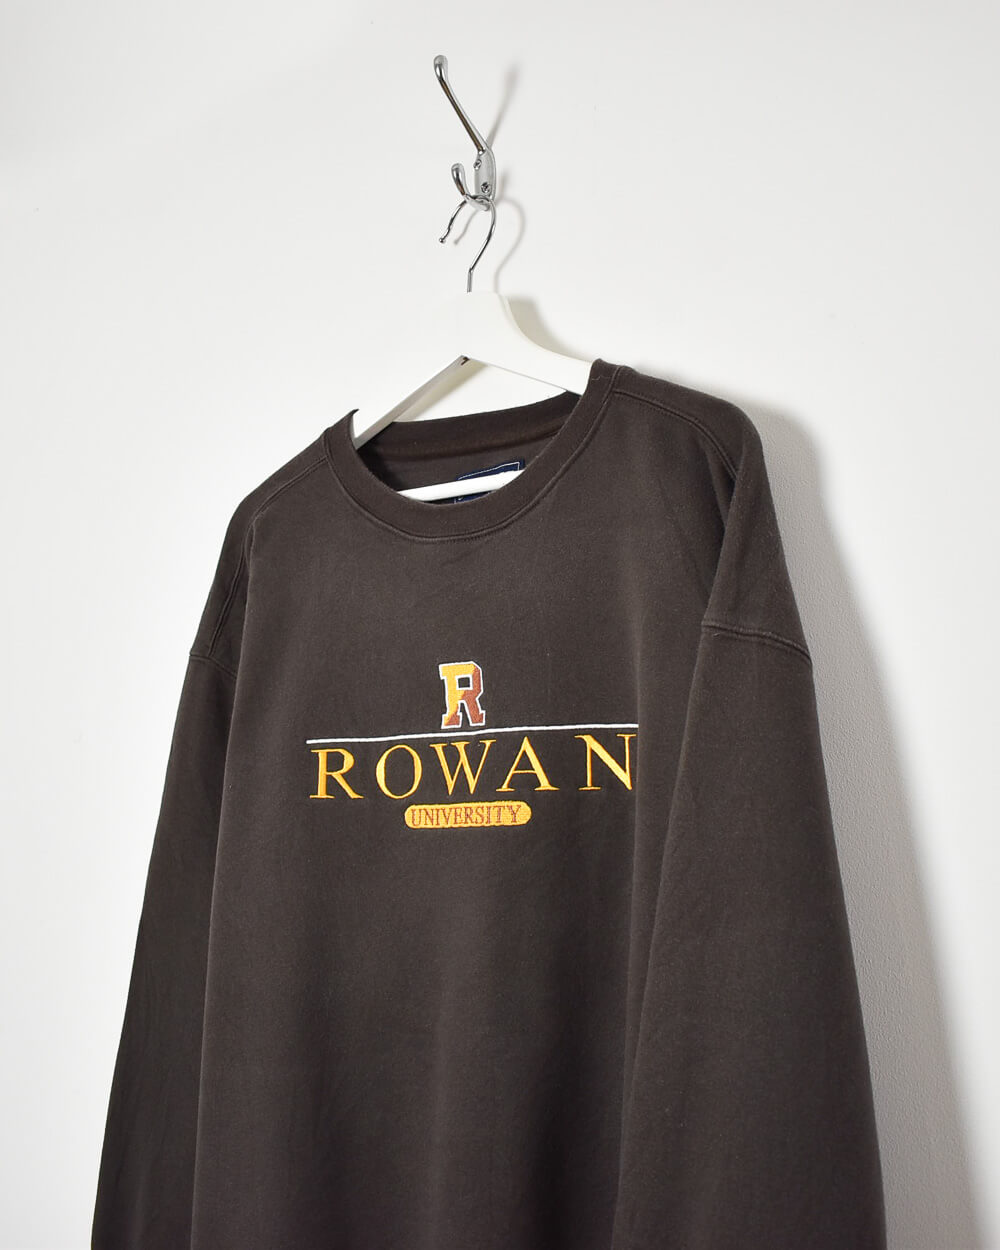 Jansport Rowan University Sweatshirt - Large - Domno Vintage 90s, 80s, 00s Retro and Vintage Clothing 